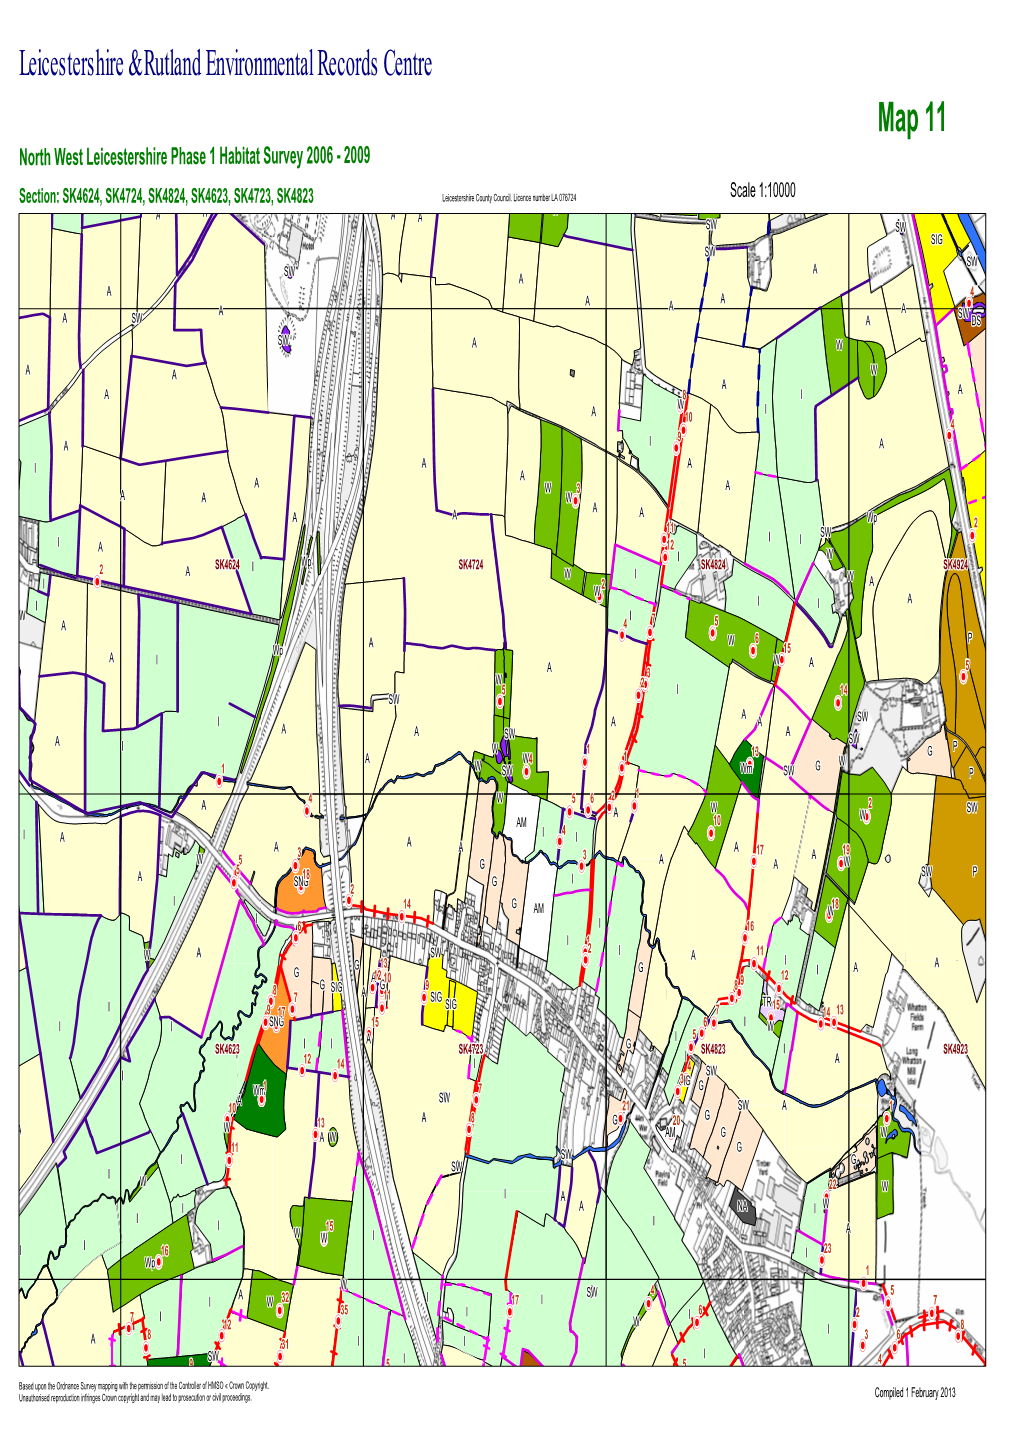 Map 11 North West Leicestershire Phase 1 Habitat Survey 2006 - 2009